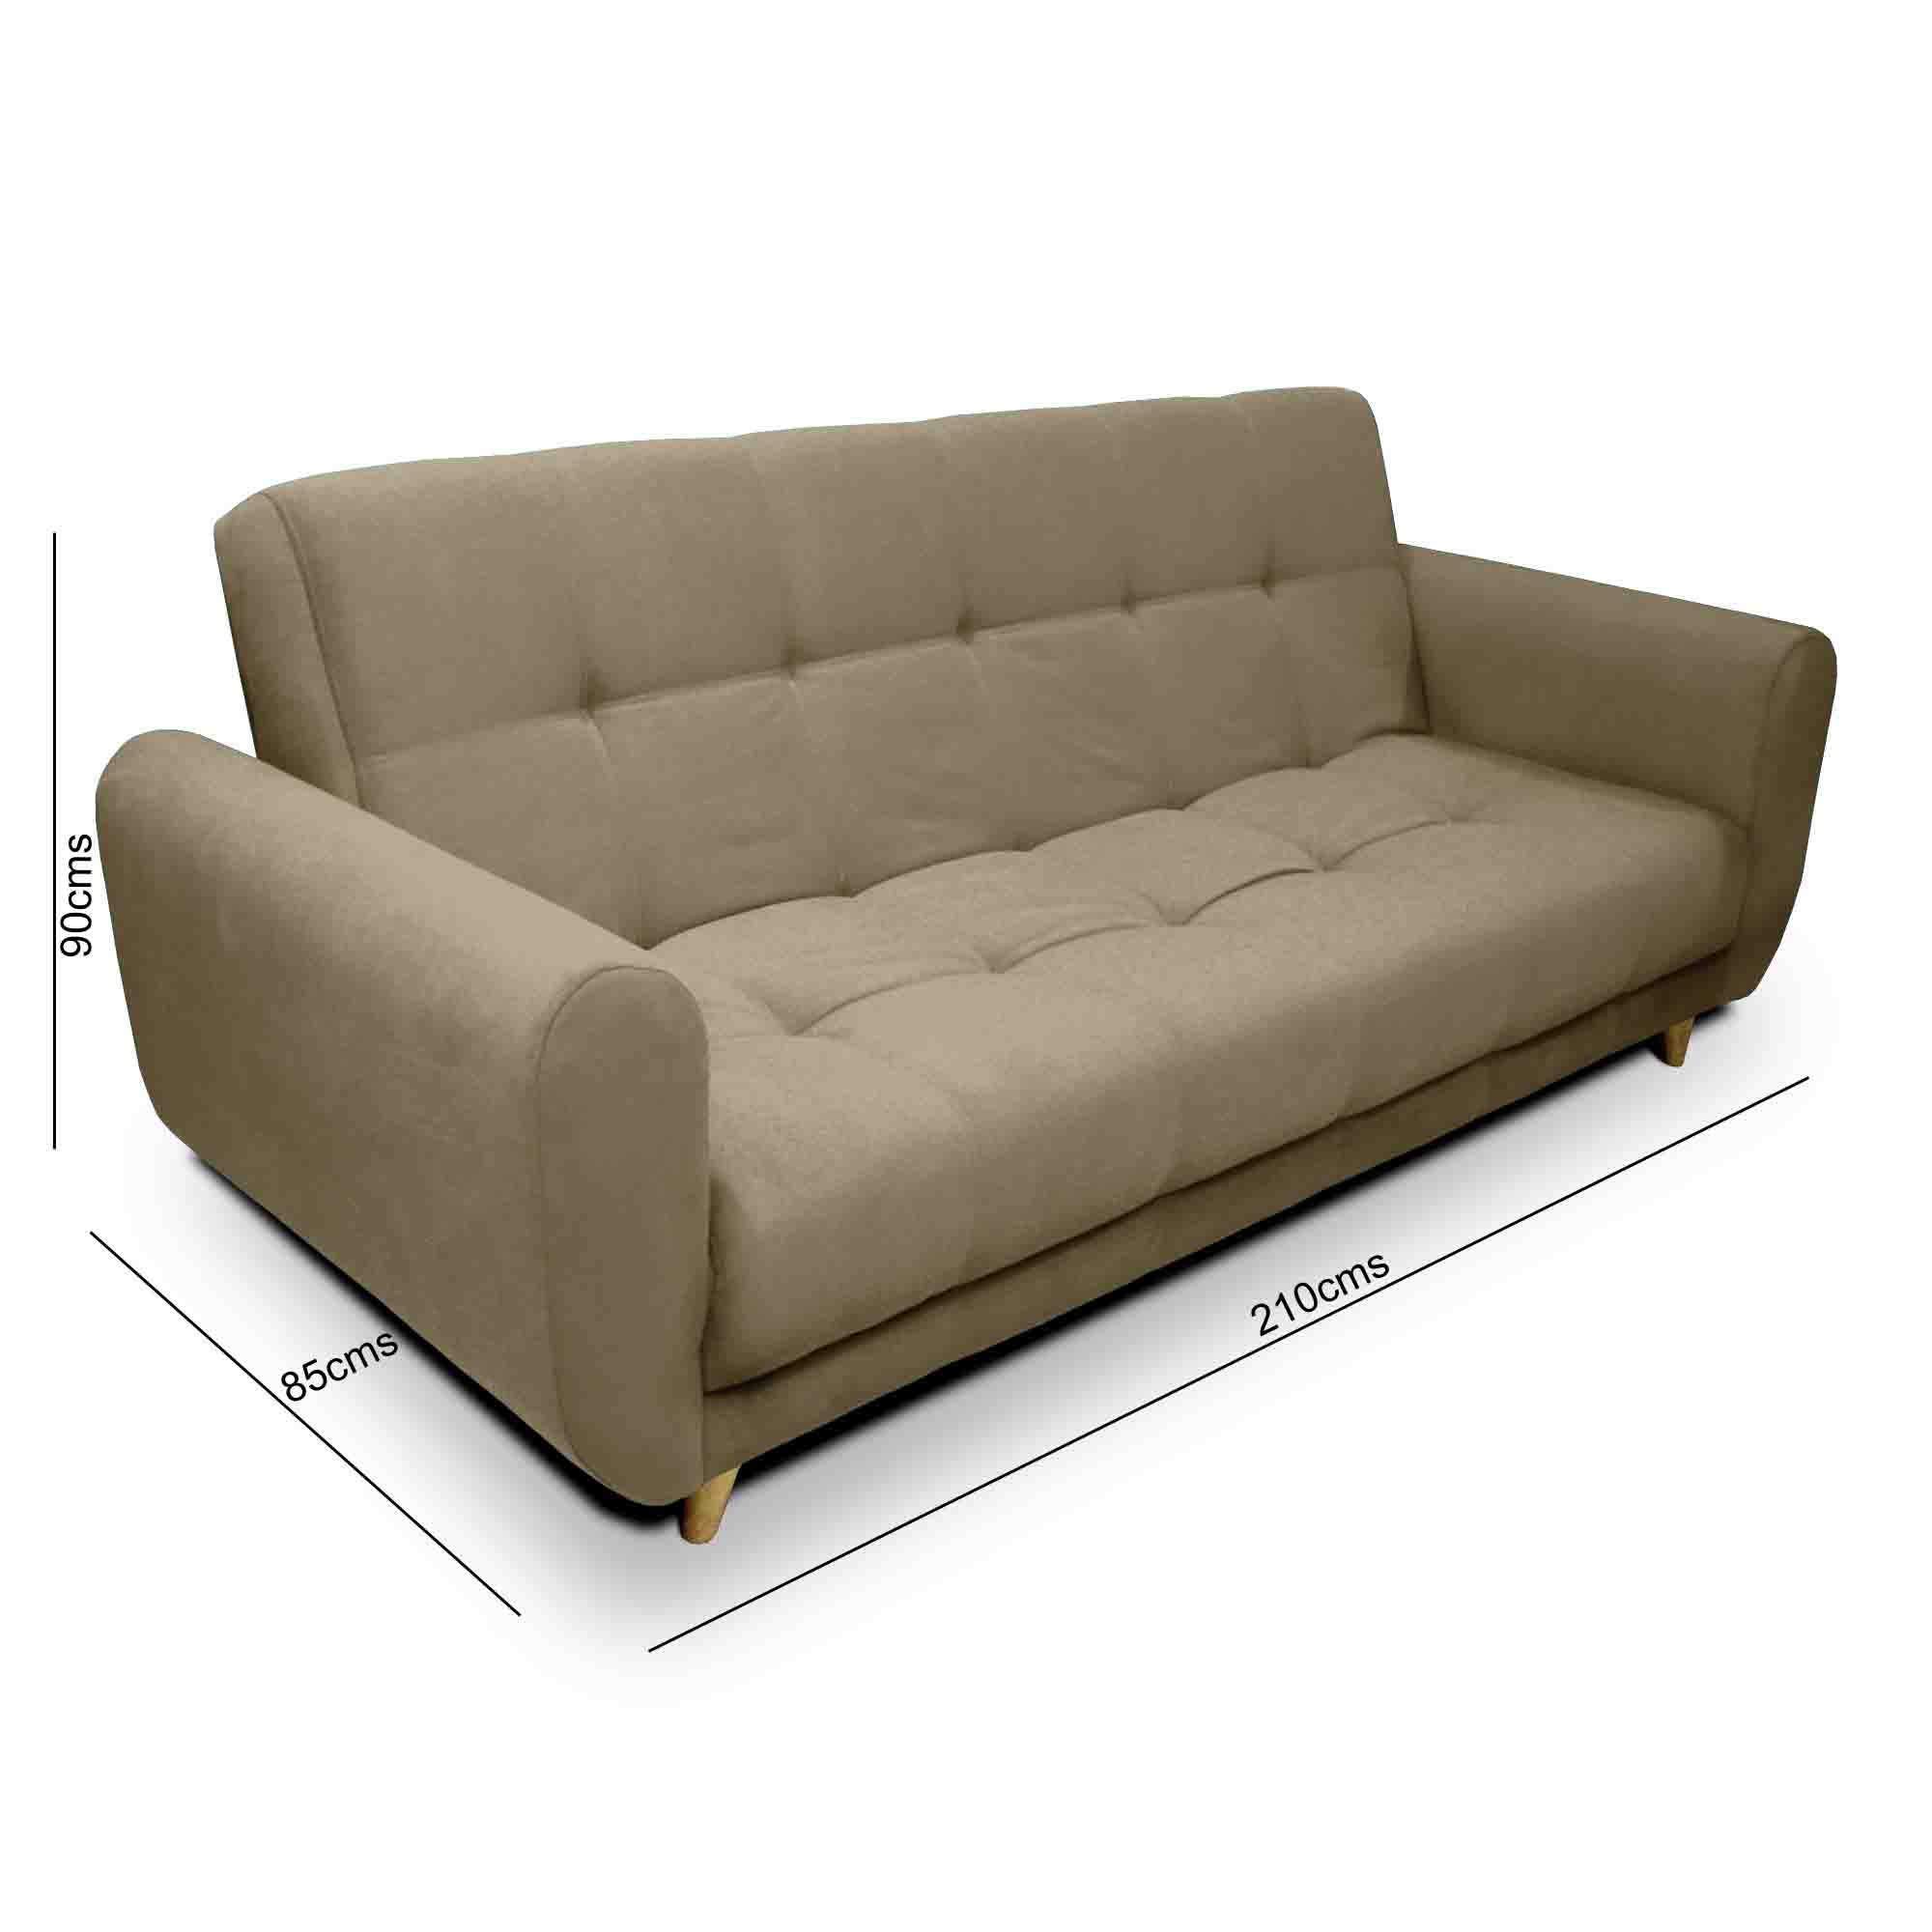 Sofa Cama Comfort Sistema Clic Clac Color Beige